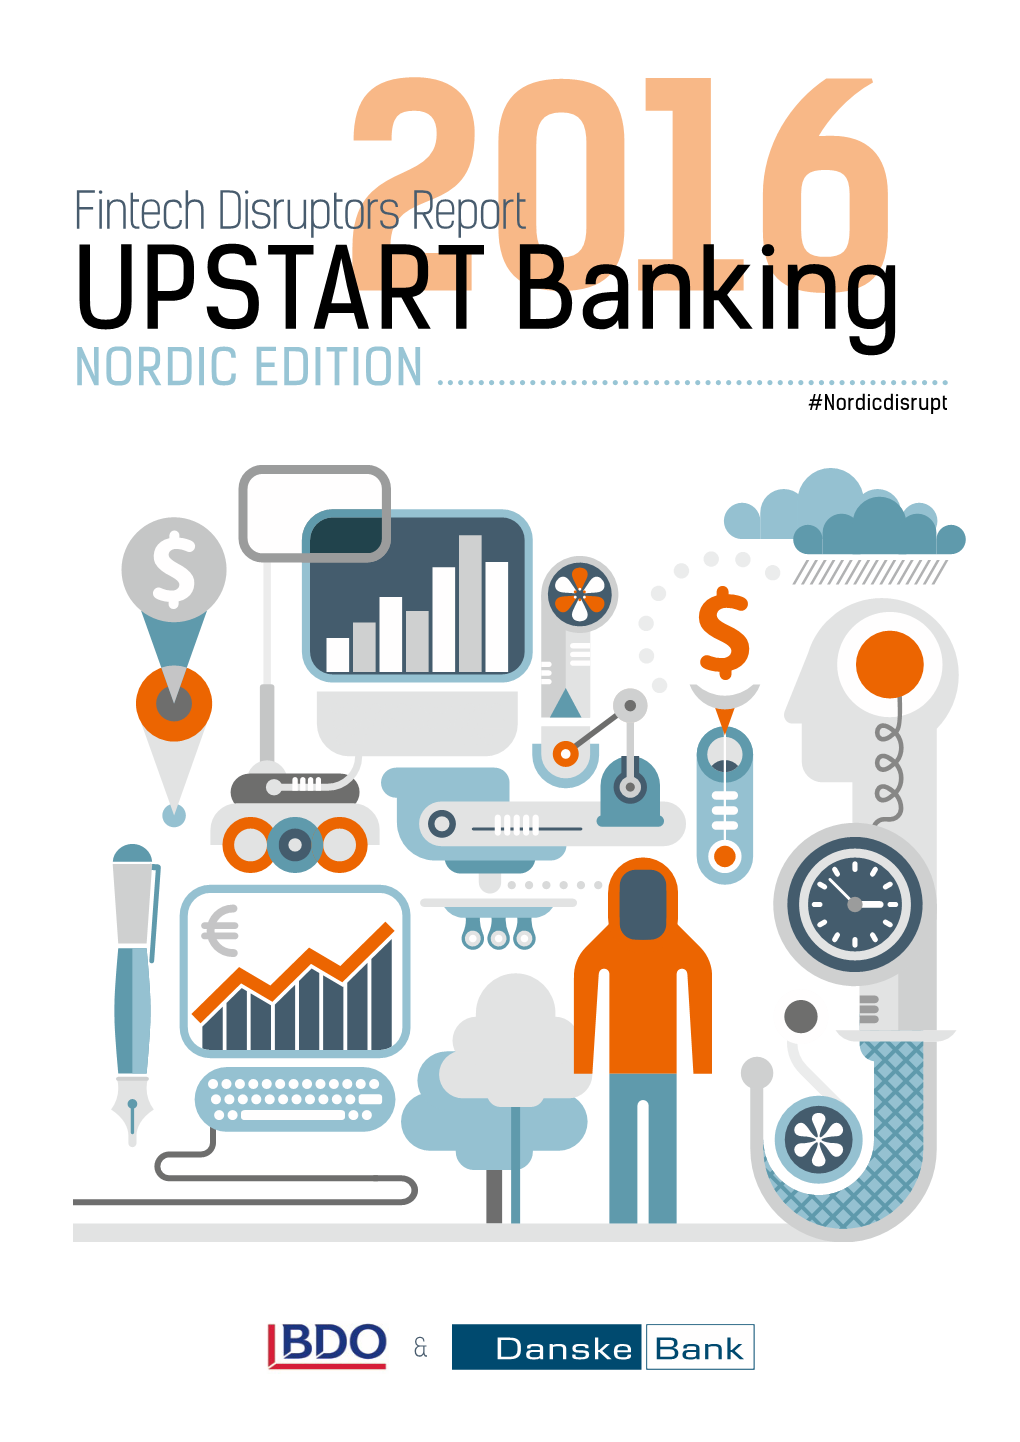 UPSTART Banking